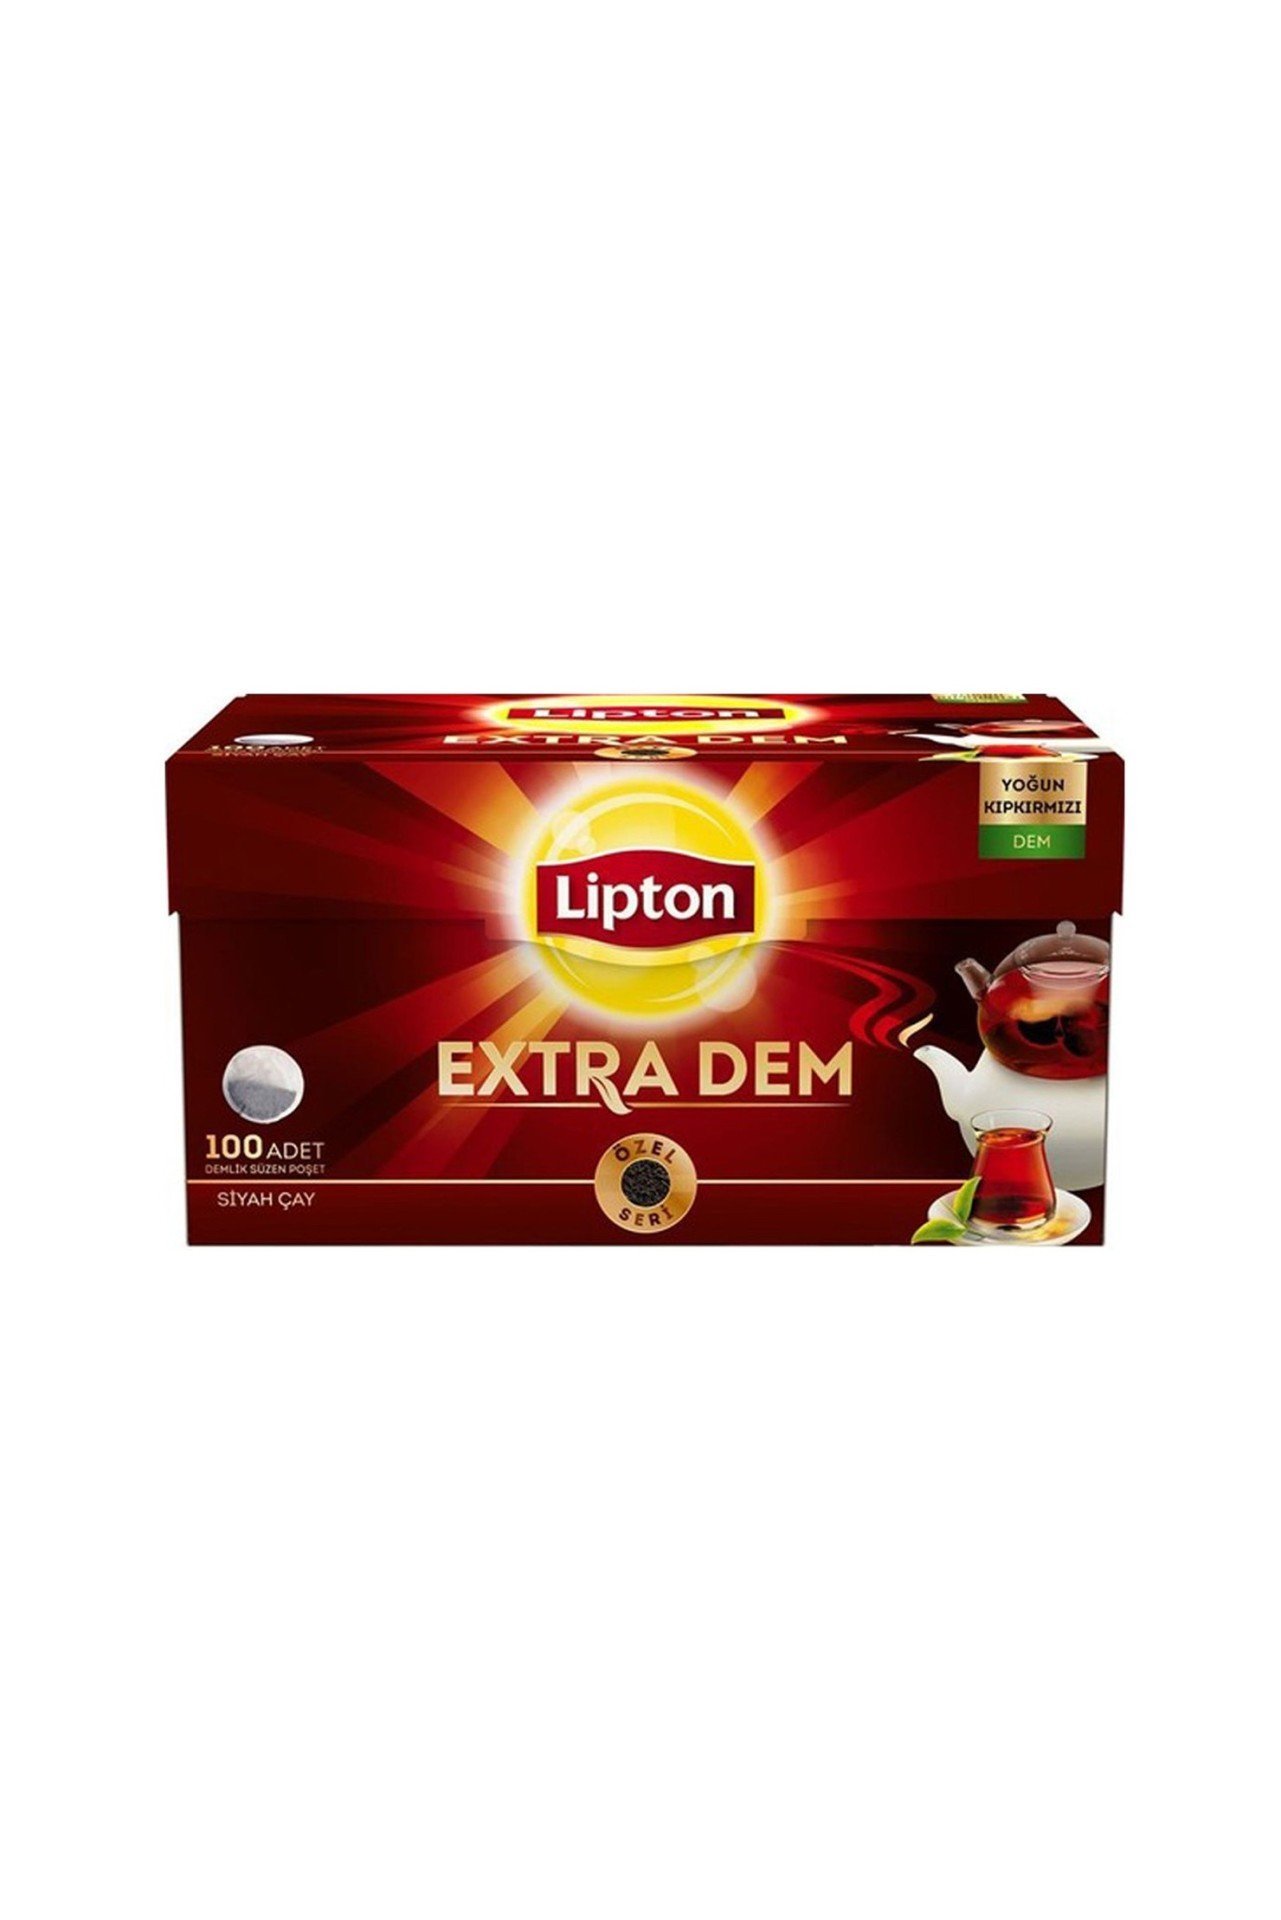 Lipton Extra Dem Demlik Poşet Çay 100lü 320gr